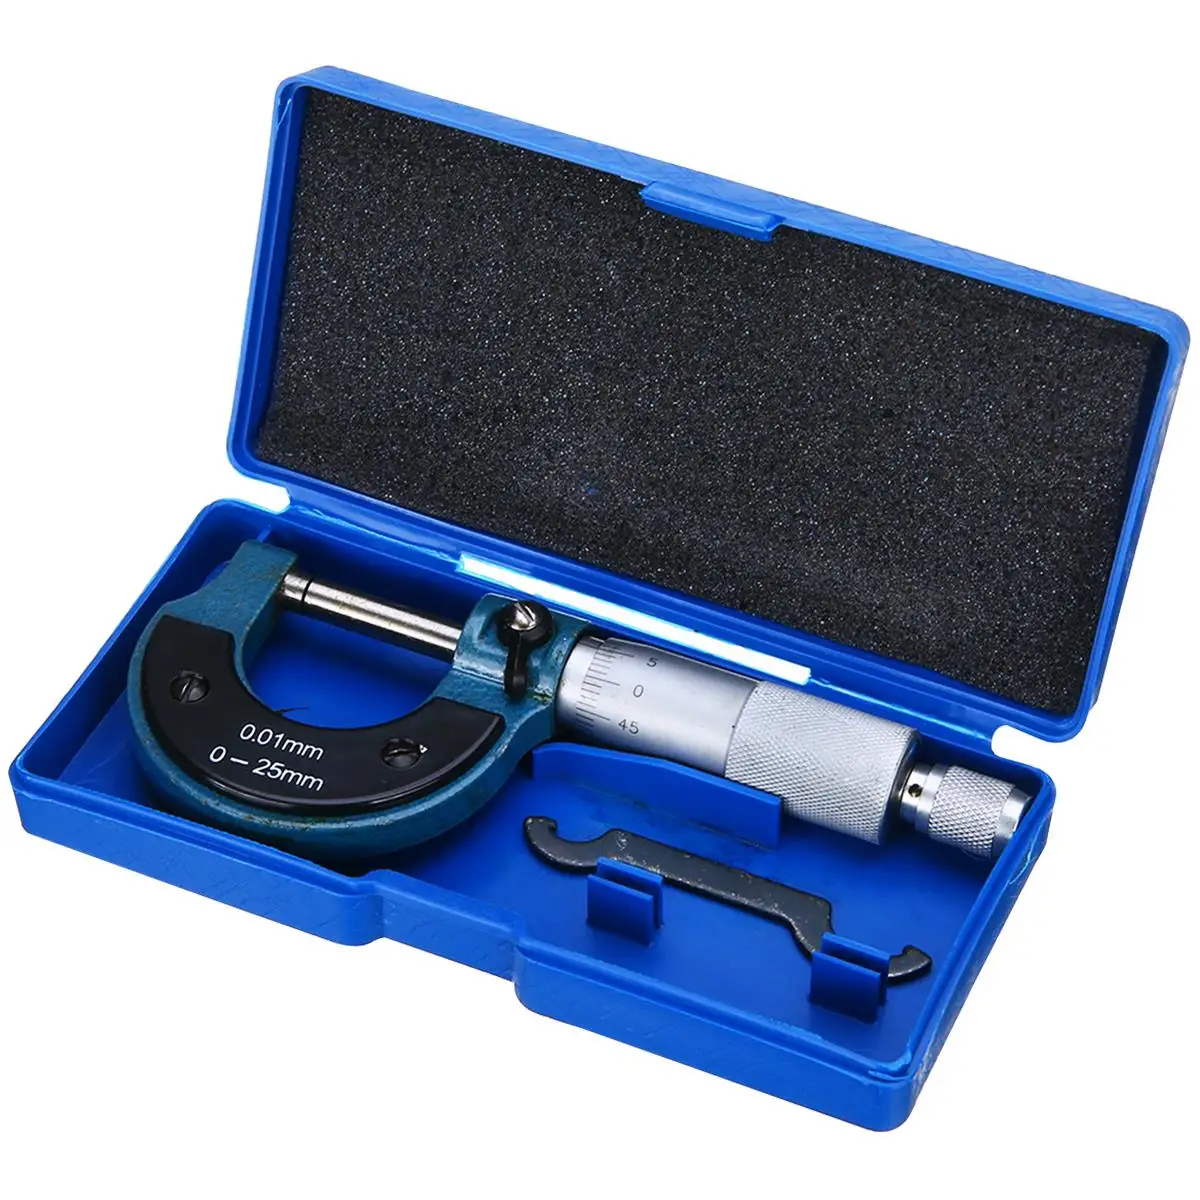 

G3 1pc Precise Gauge Micrometer 0-25mm 0.01mm Outside Metric Micrometer Tool With Metal Caliper Tool For Measuring Tools